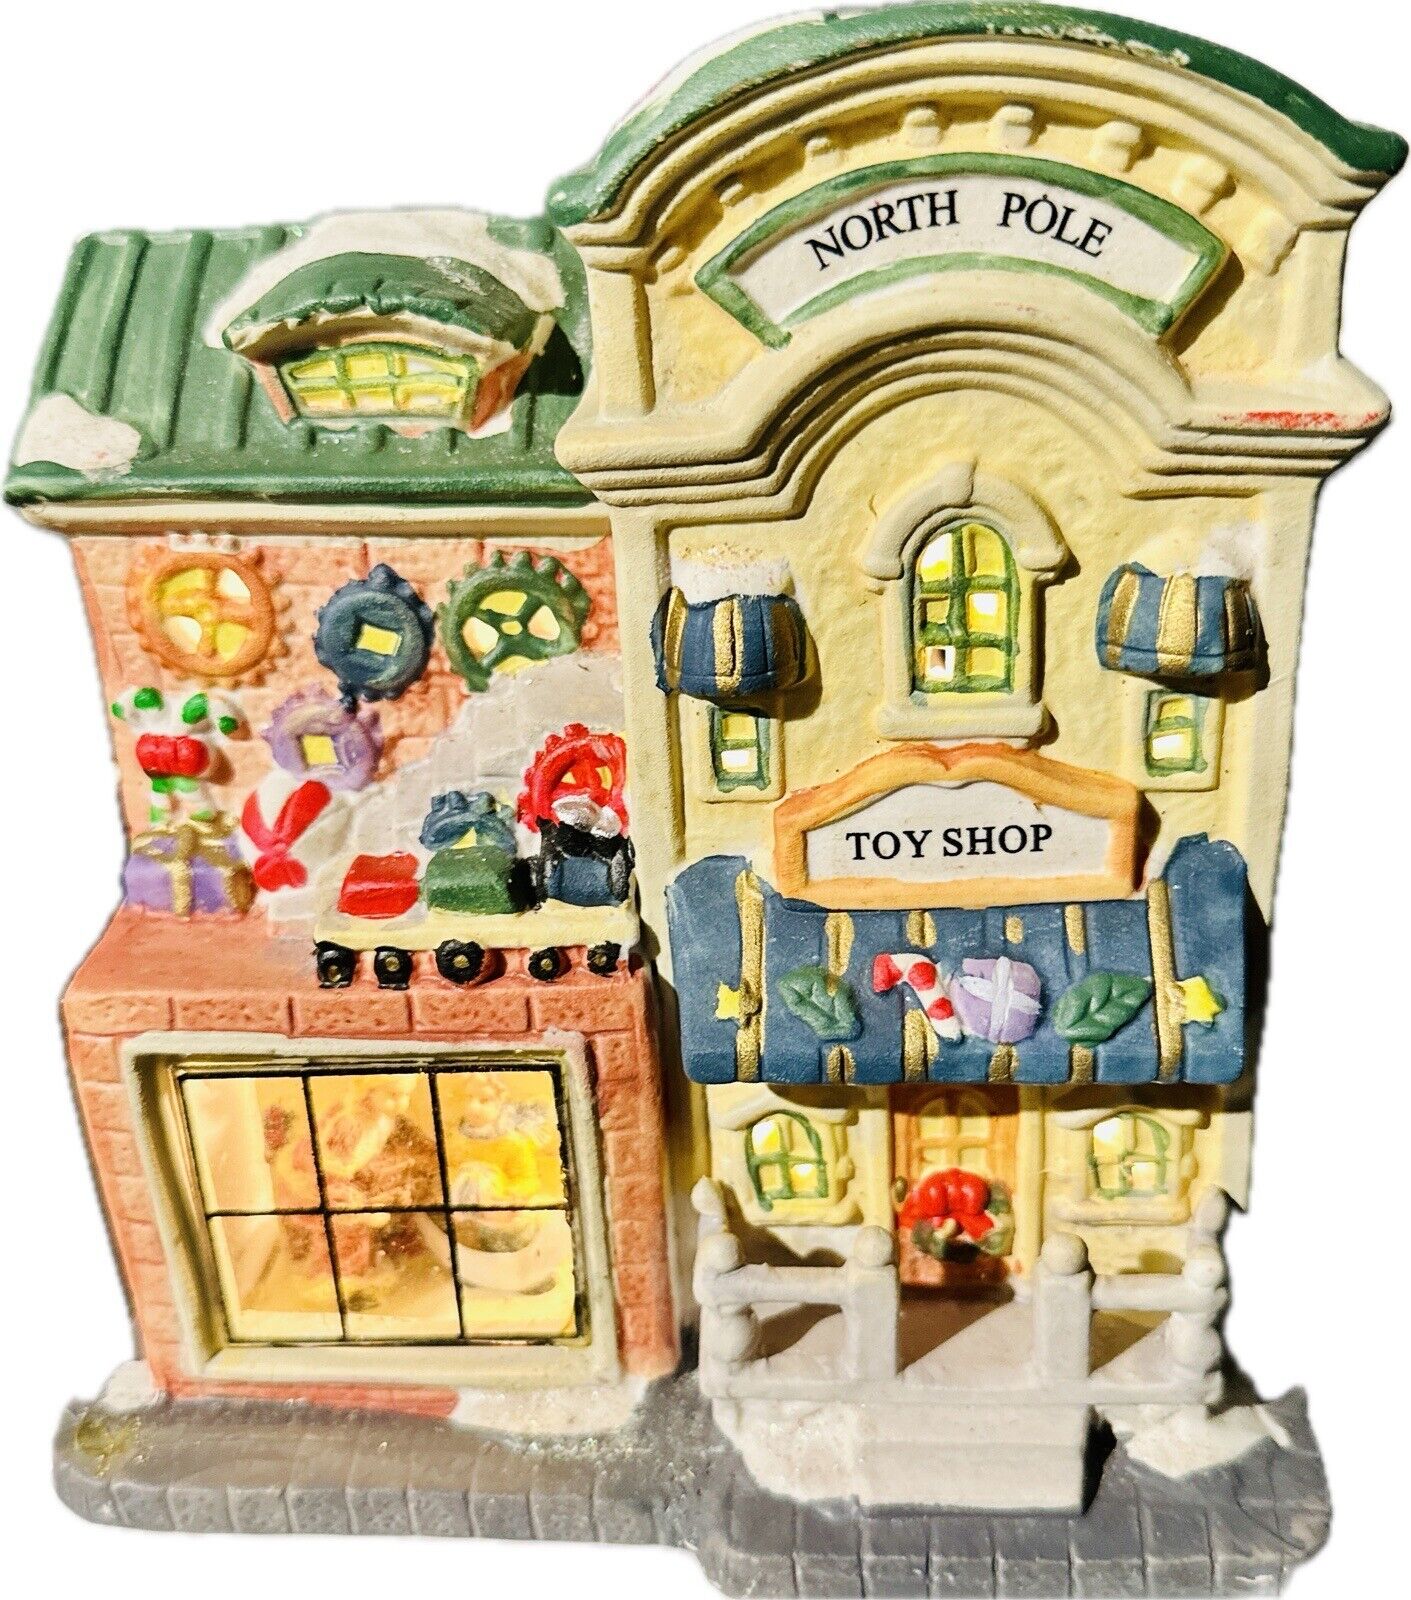 Vintage Christmas Holiday Wellington Square North Pole Toy Shop Building Decor